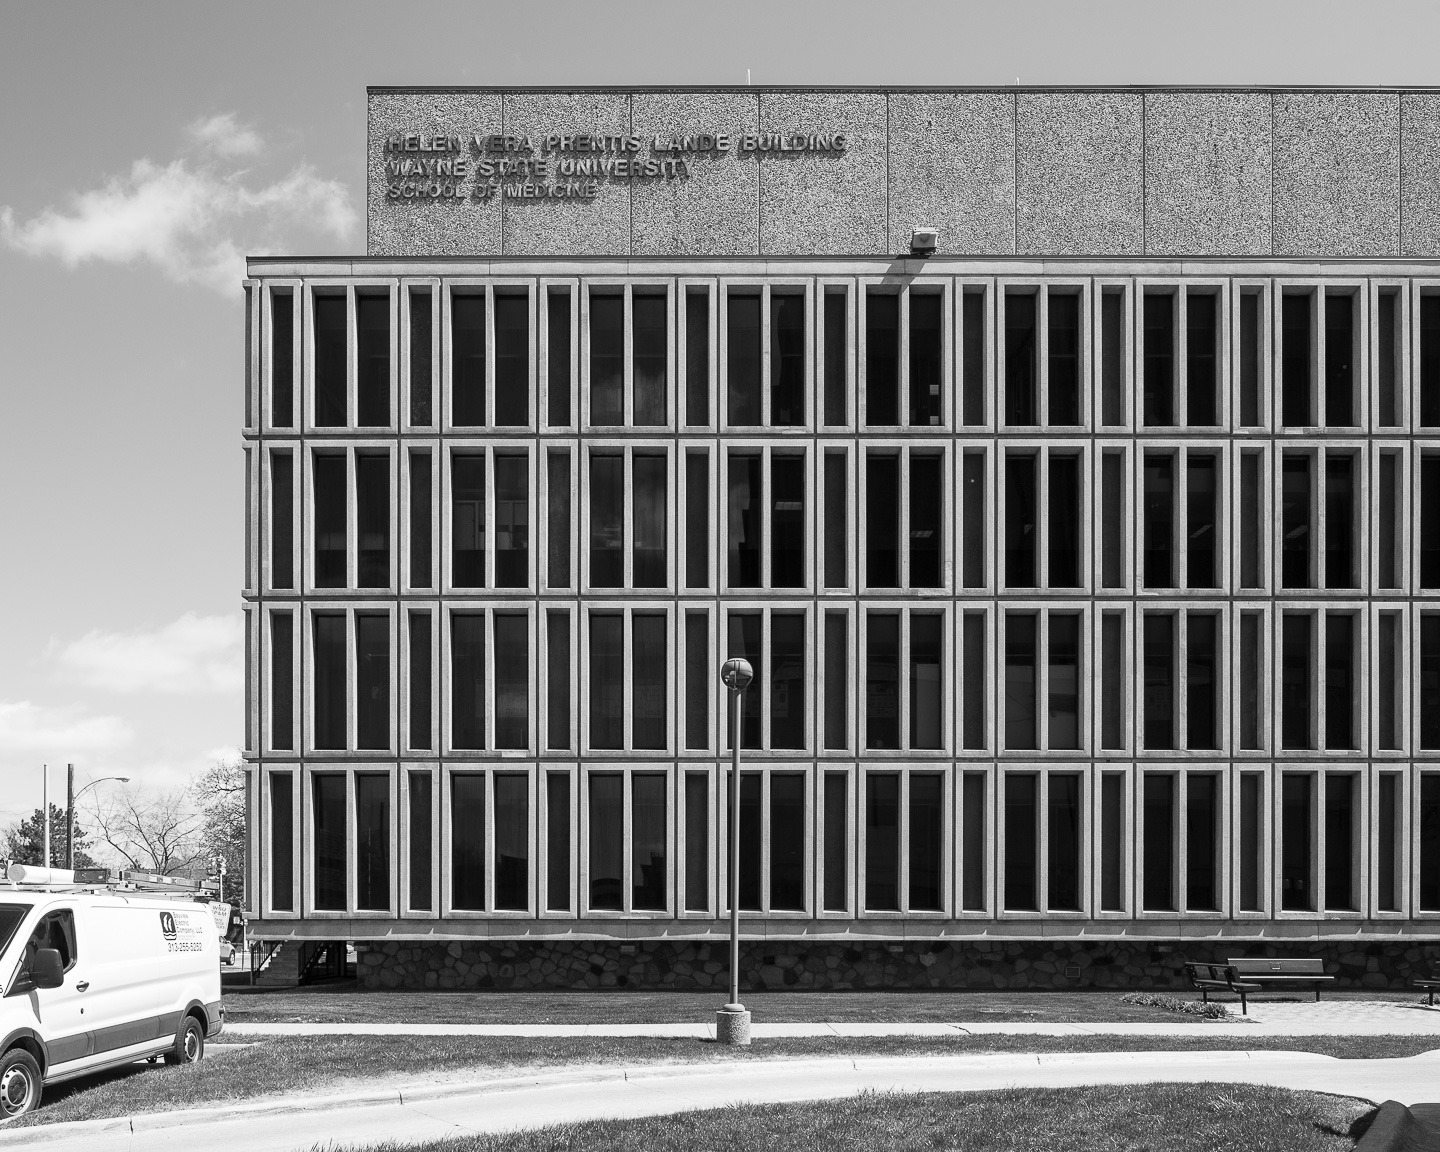 Helen Vera Prentis Land Building in Detroit by Smith, Hinchman & Grylls. Photo by Jason R. Woods.